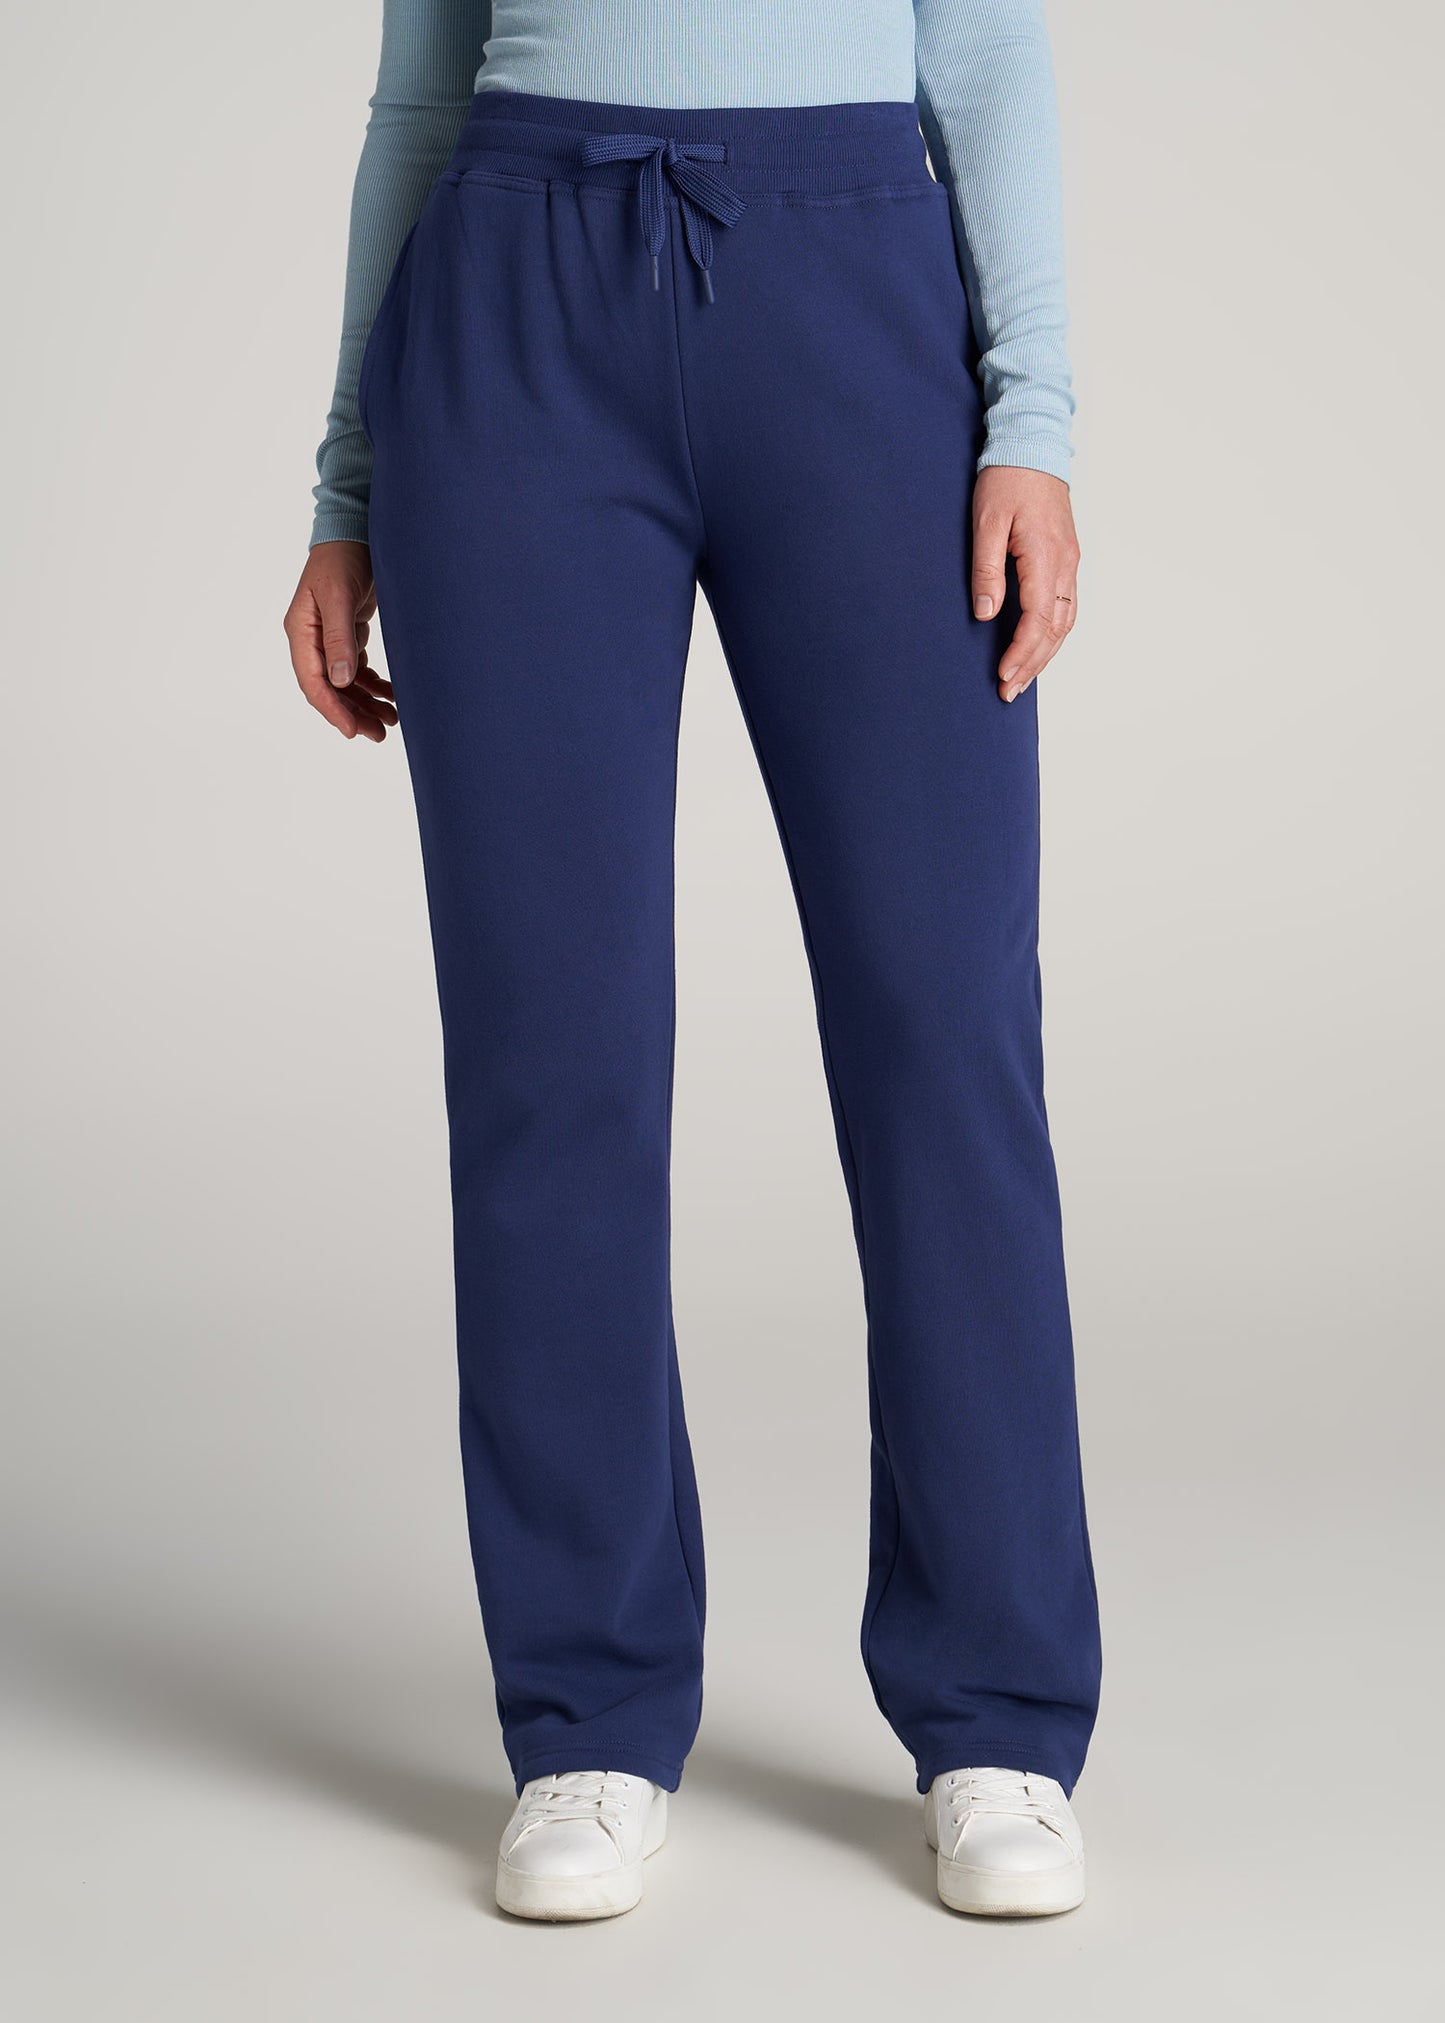    American-Tall-Women-WKND-Fleece-Open-Bottom-Pant-Midnight-Blue-front